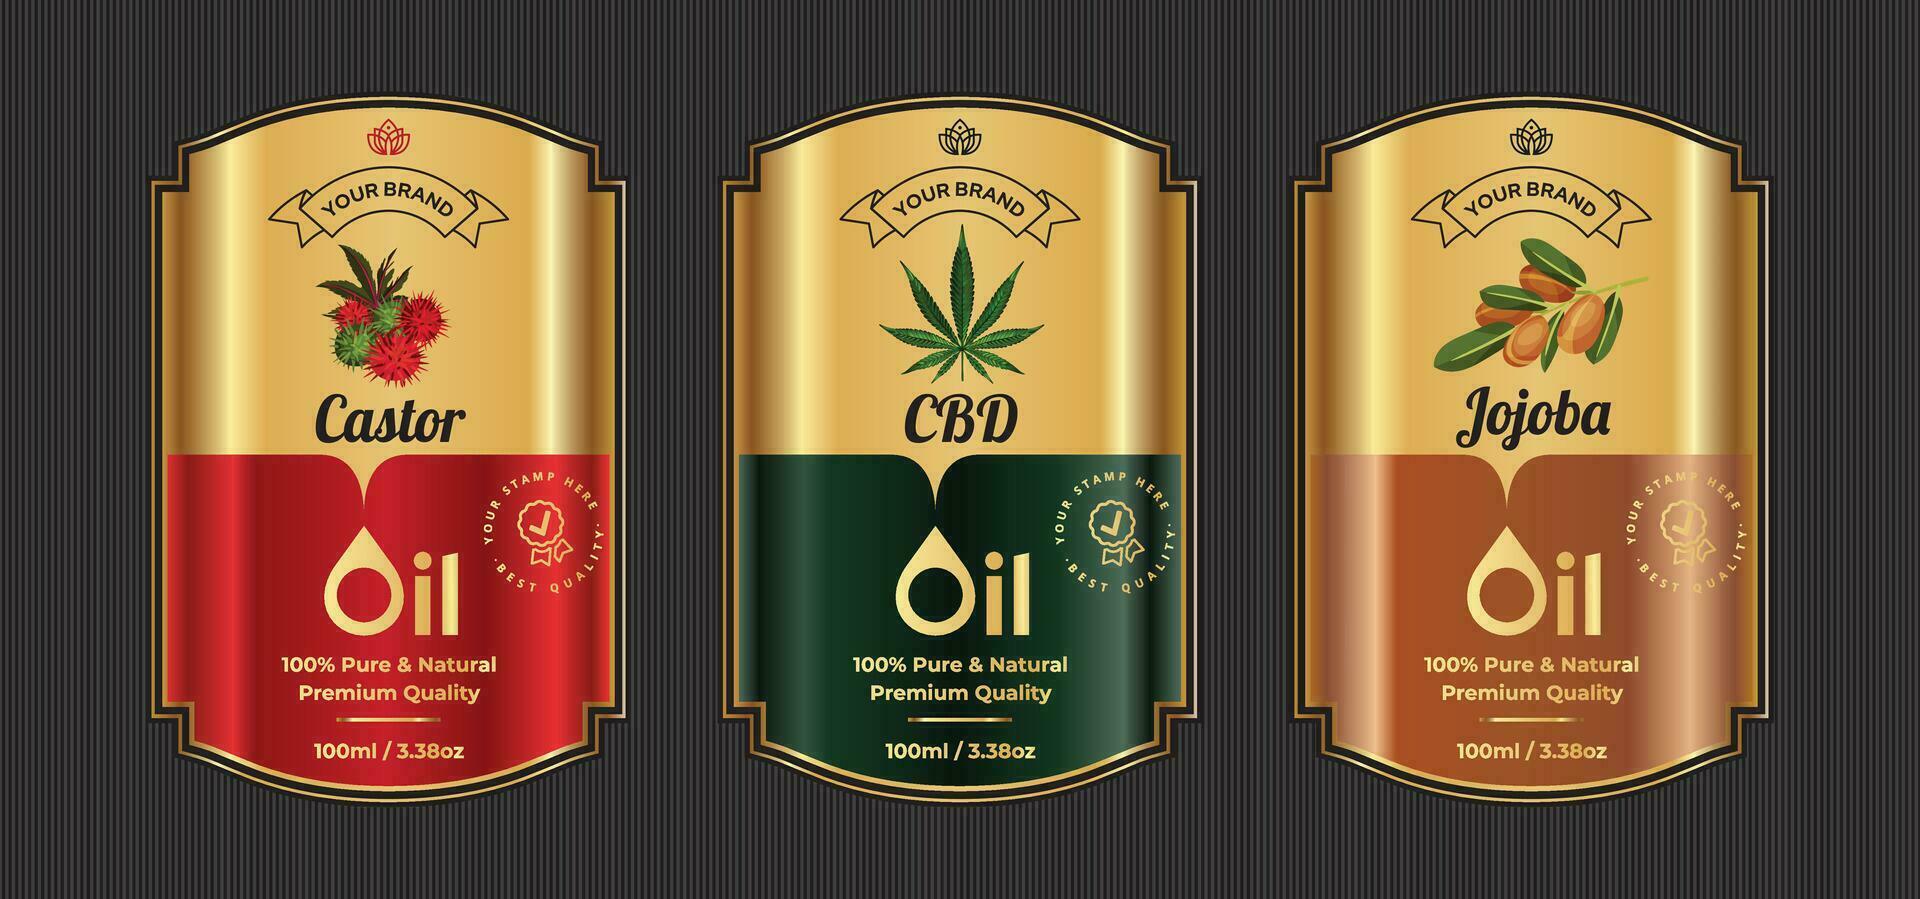 Castor CBD and Jojoba oil label design style vintage gold premium labels vector